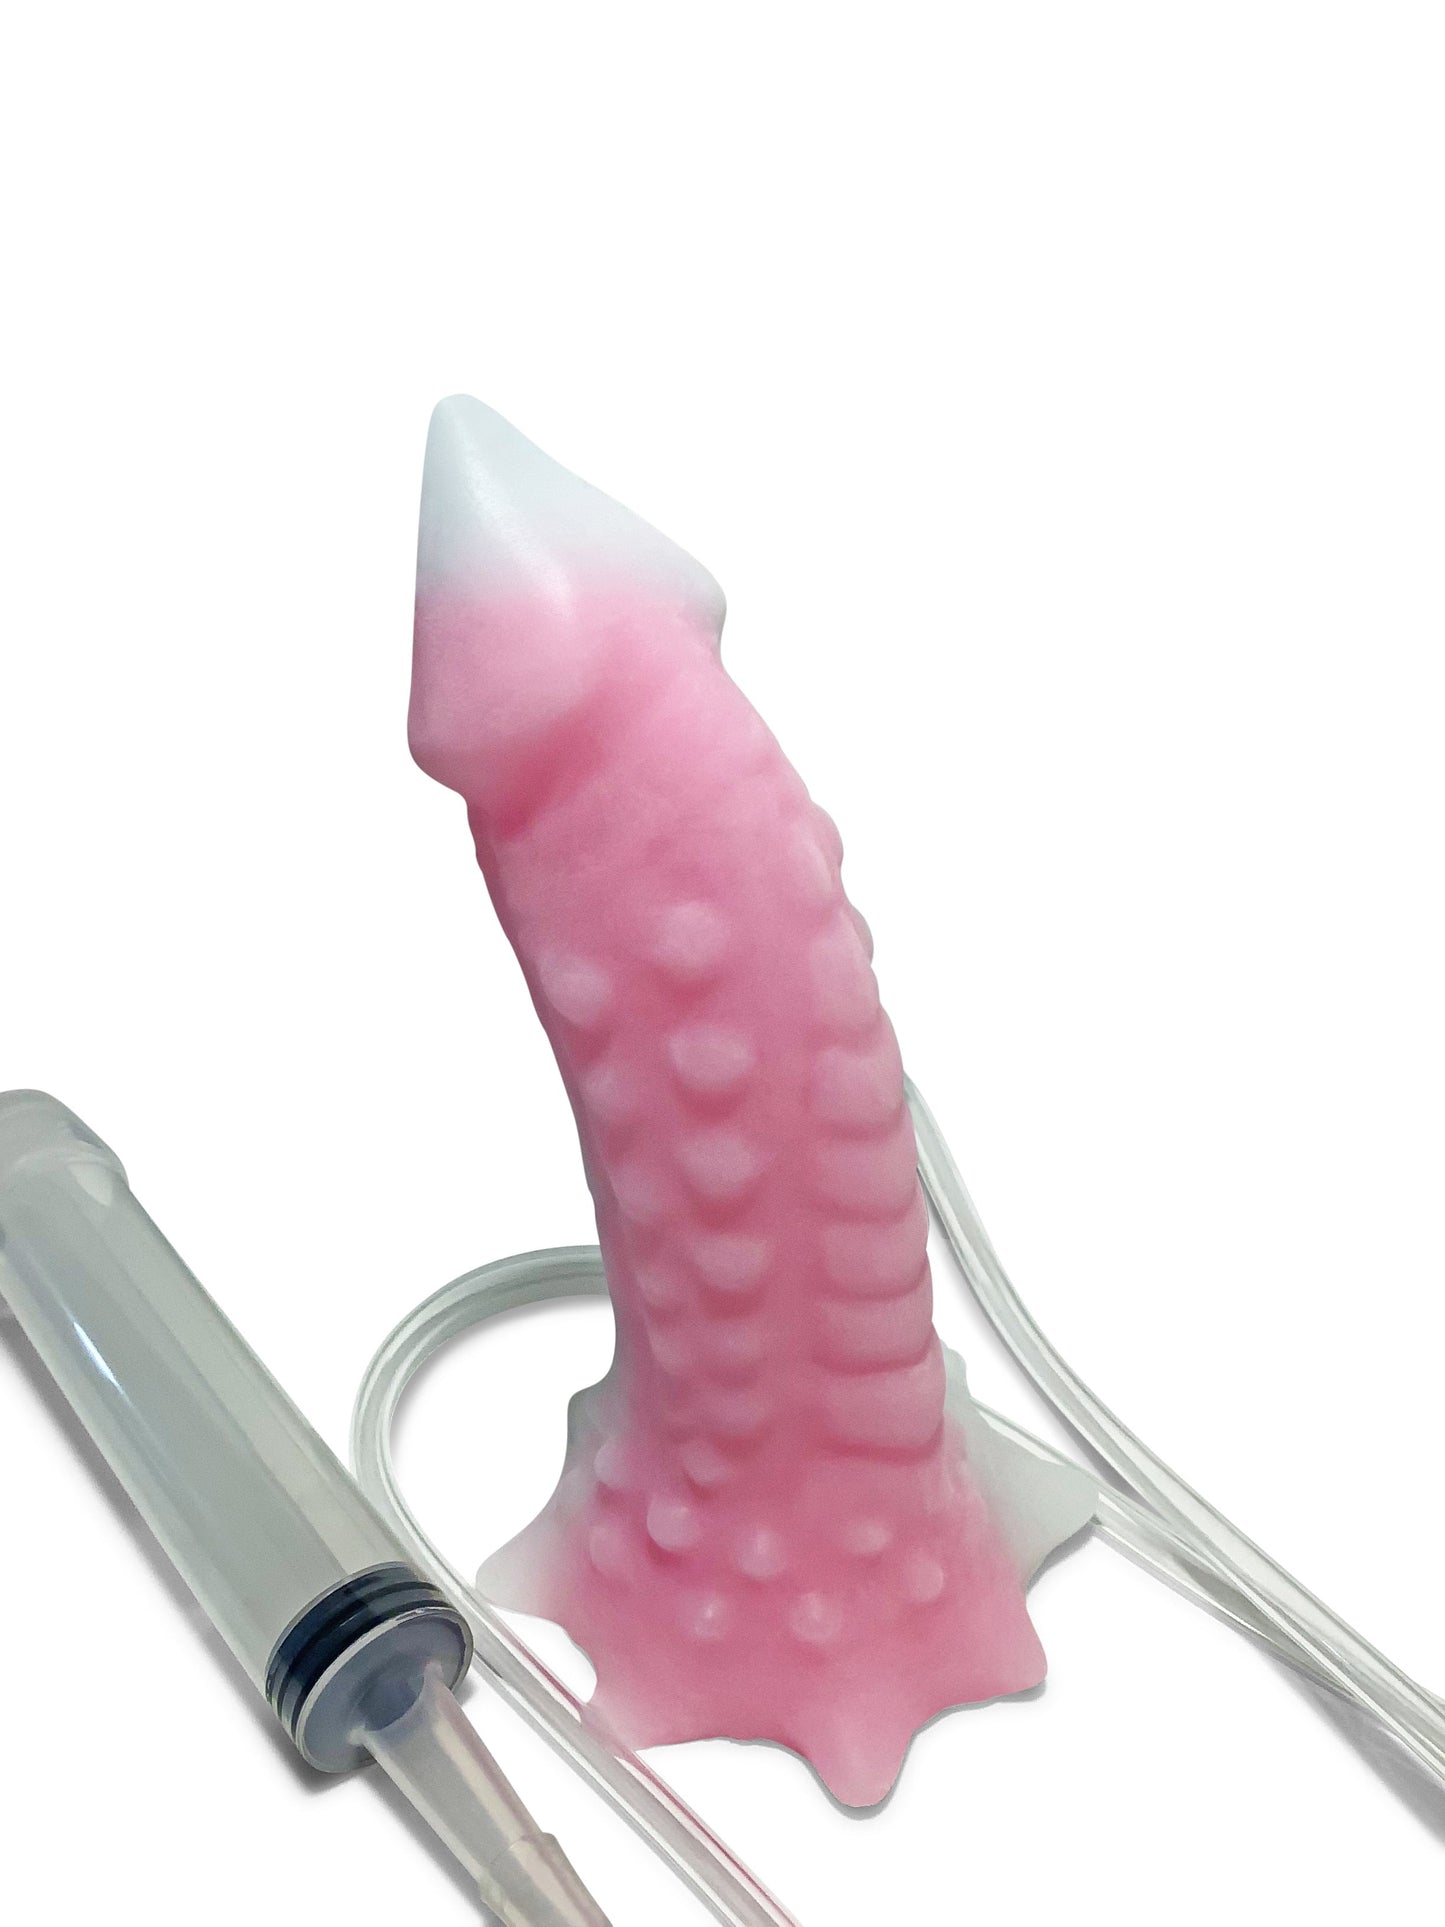 Ejaculating Dildo "The Beast" Dildo Squirting Penis Sex Toy